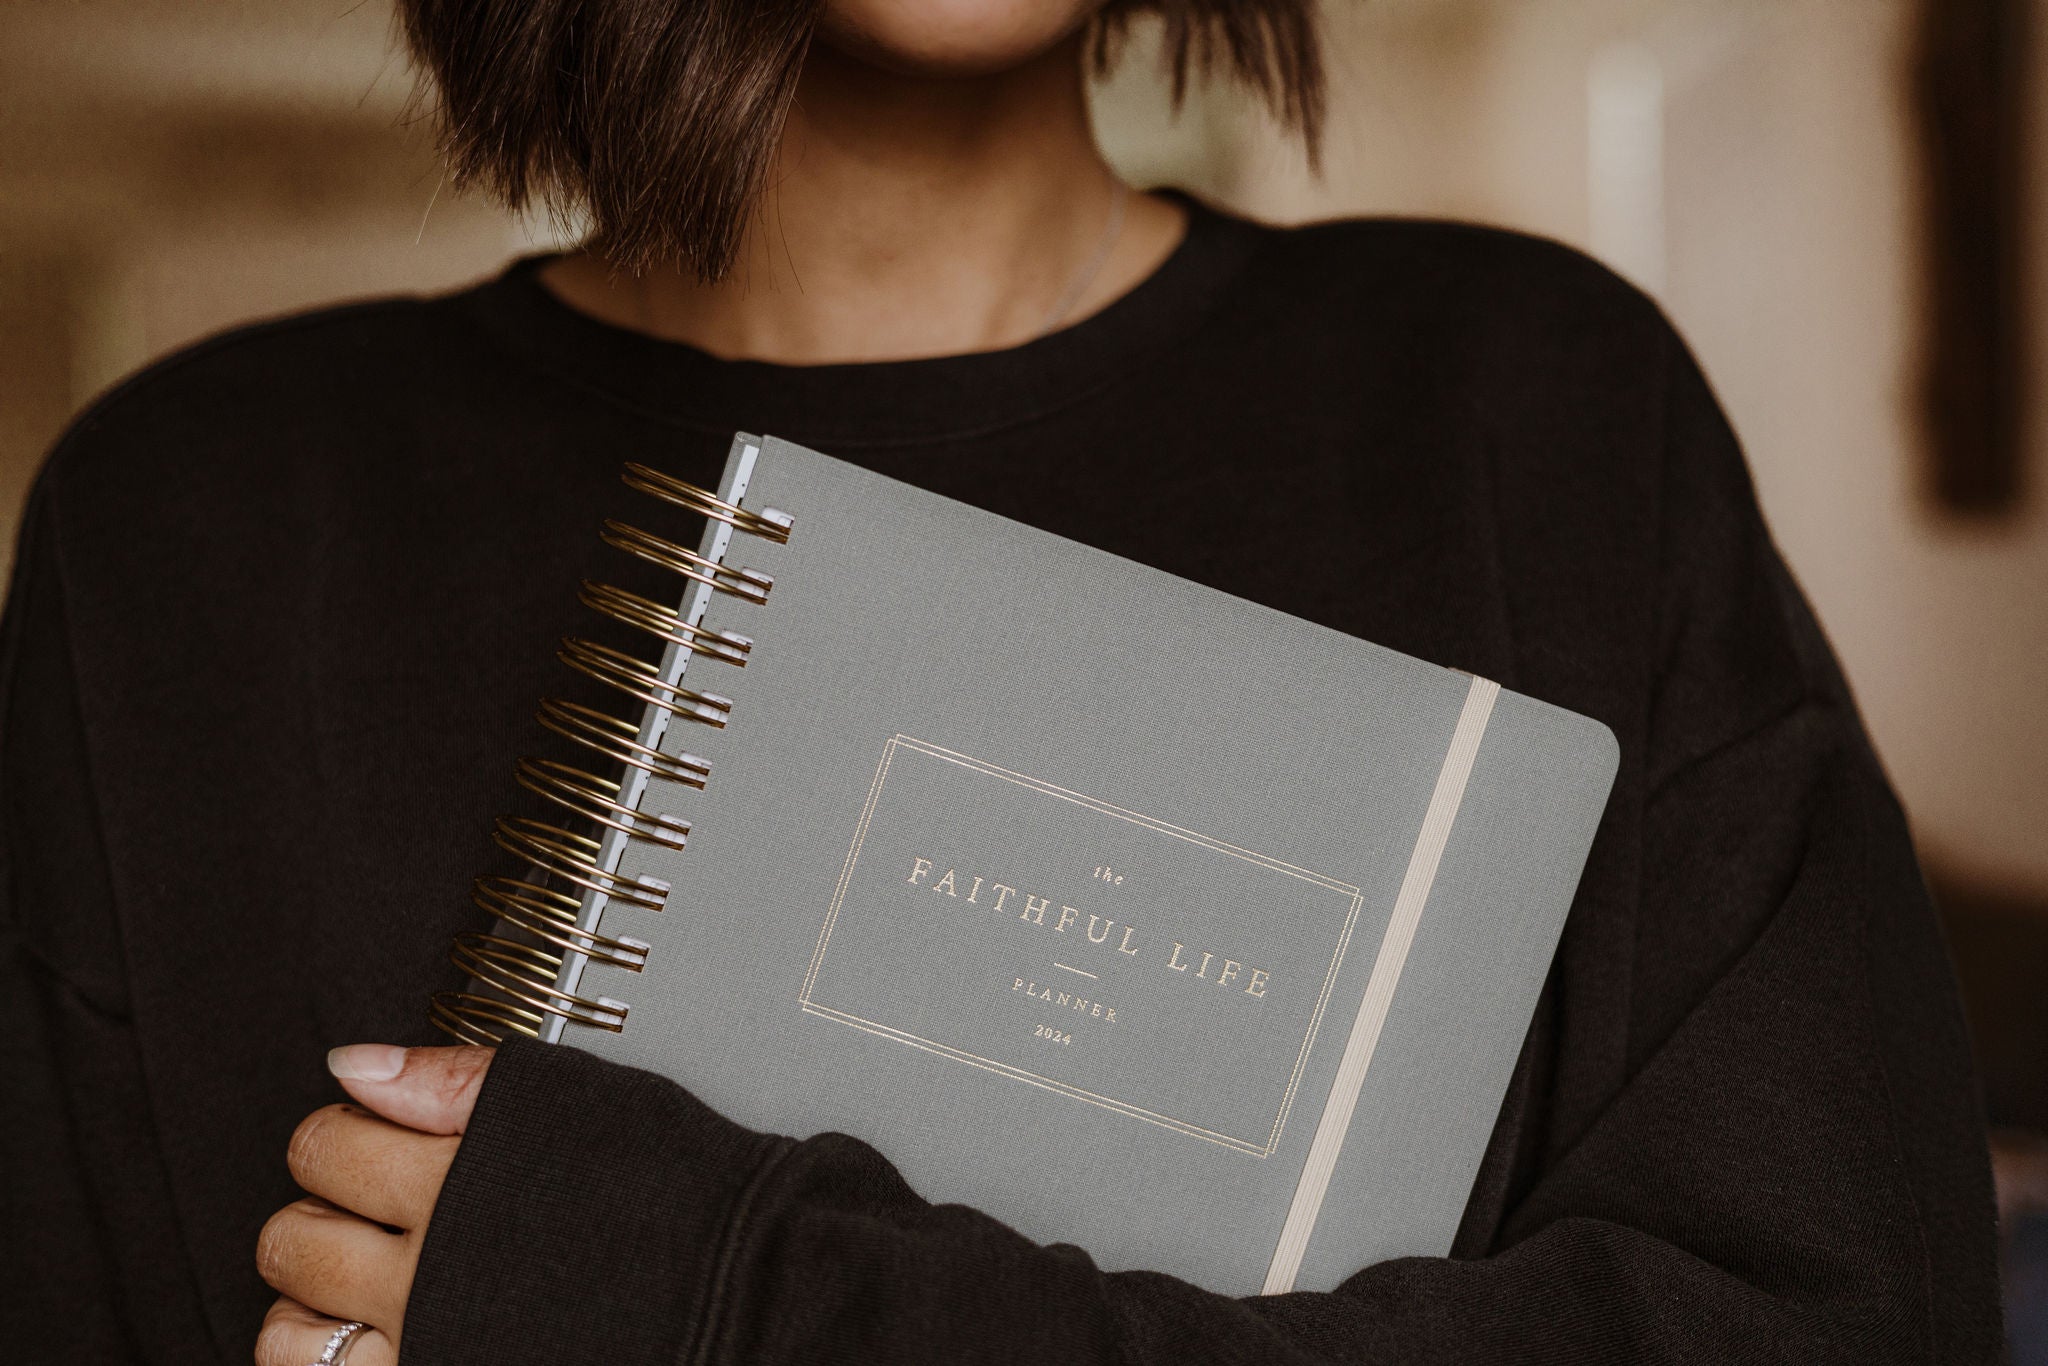 The Faithful Life Planner - The #1 Planner for Christian Women – The  Faithful Life Co